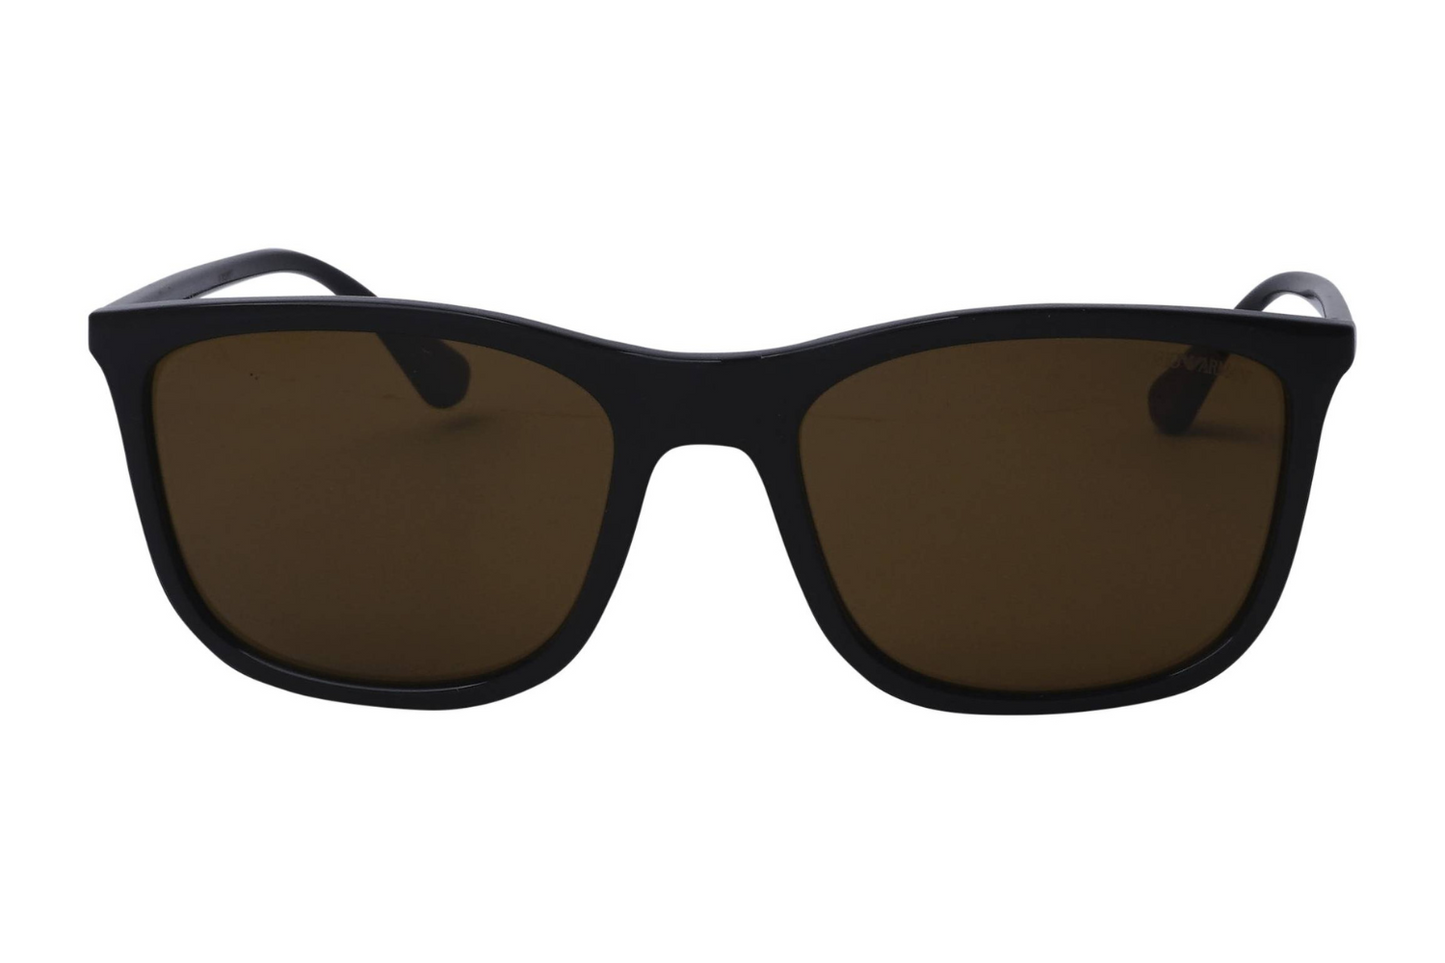 Emporio Armani Sunglasses EA 4155 5017/83 POLARIZED